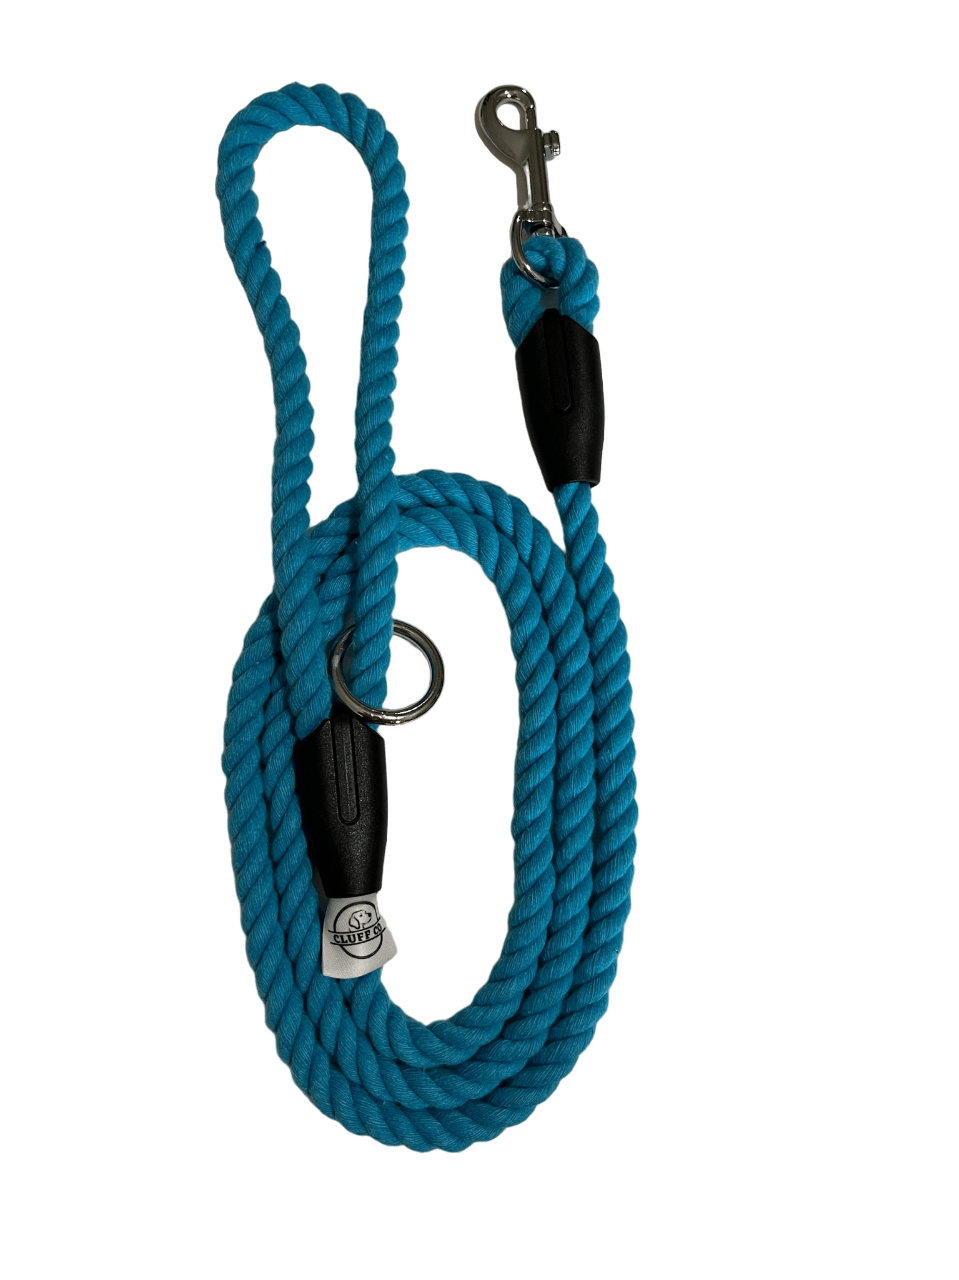 Teal Rope Leash - (Small) - Cluff CO LLC